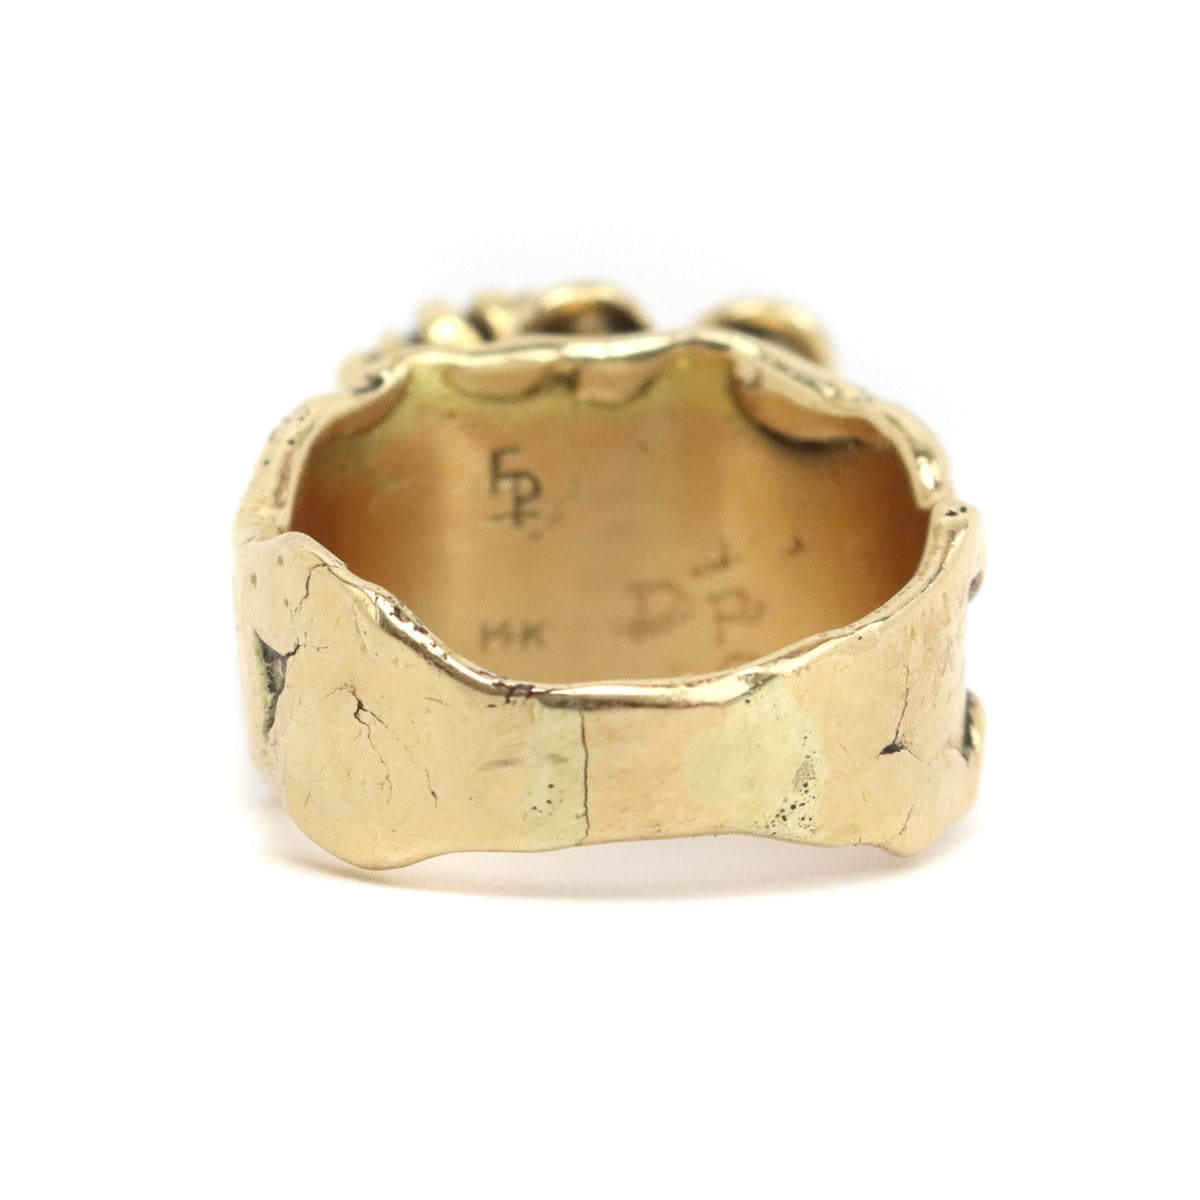 Frank Patania Jr. - Persian Turquoise, 14K Gold, Ring with Mushroom Design c. 1970, size 9.75 (J91699-0123-023) 3